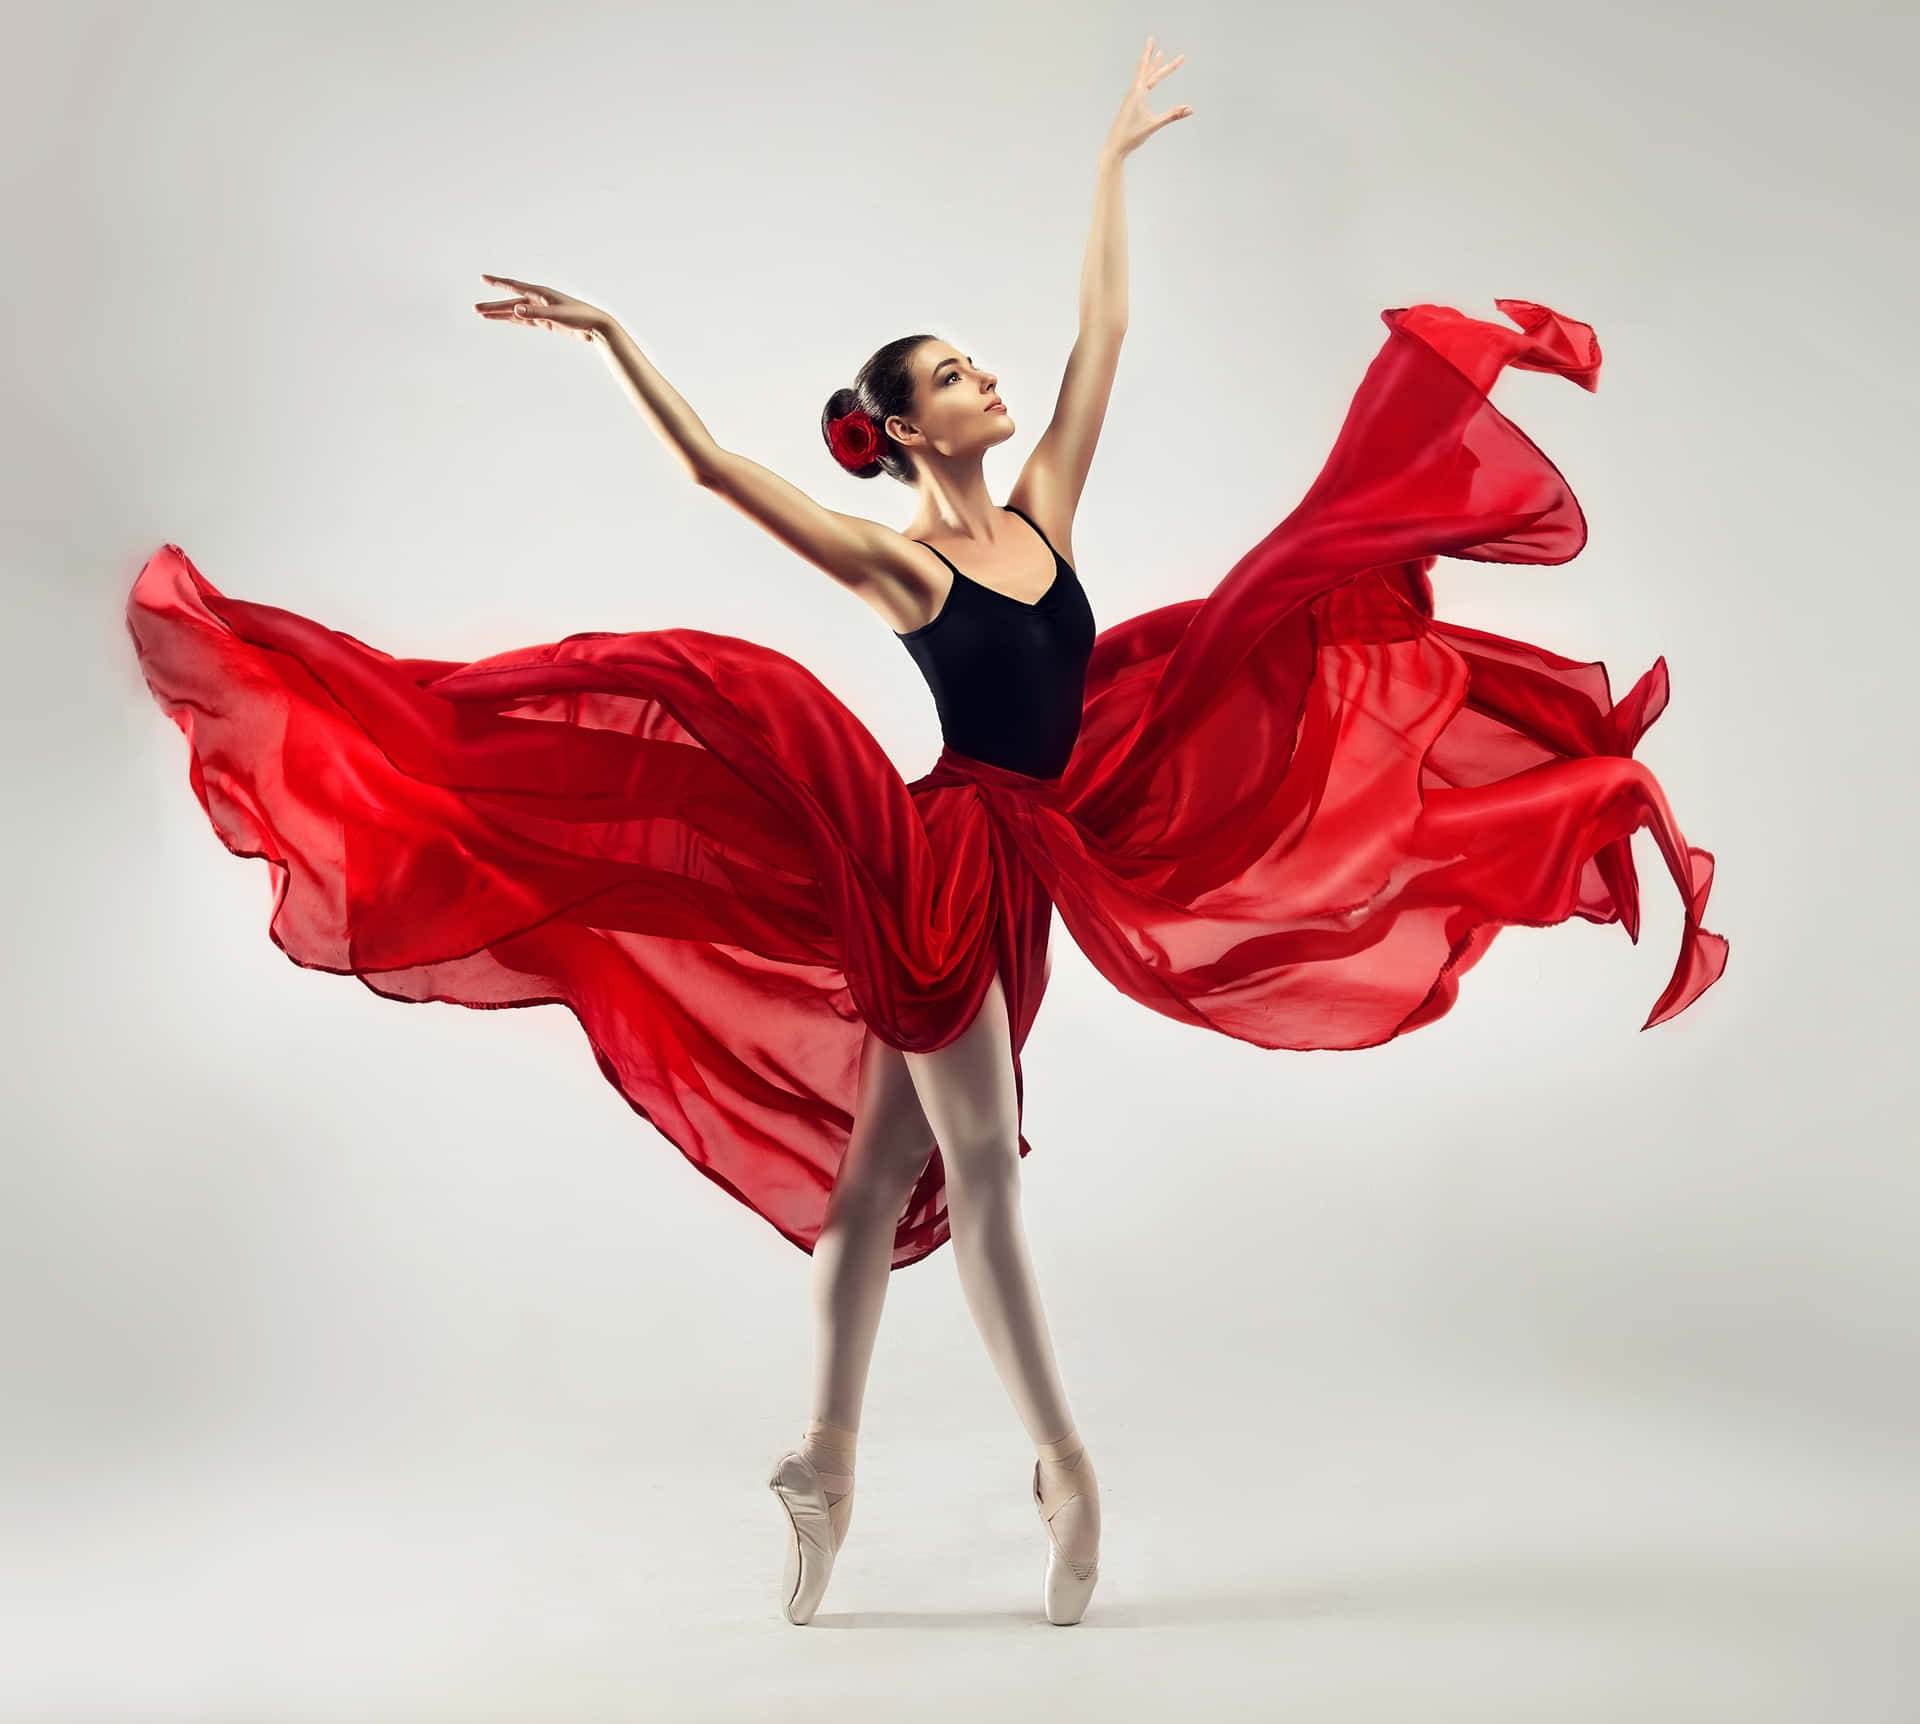 A Ballerina In Red Dress Posing